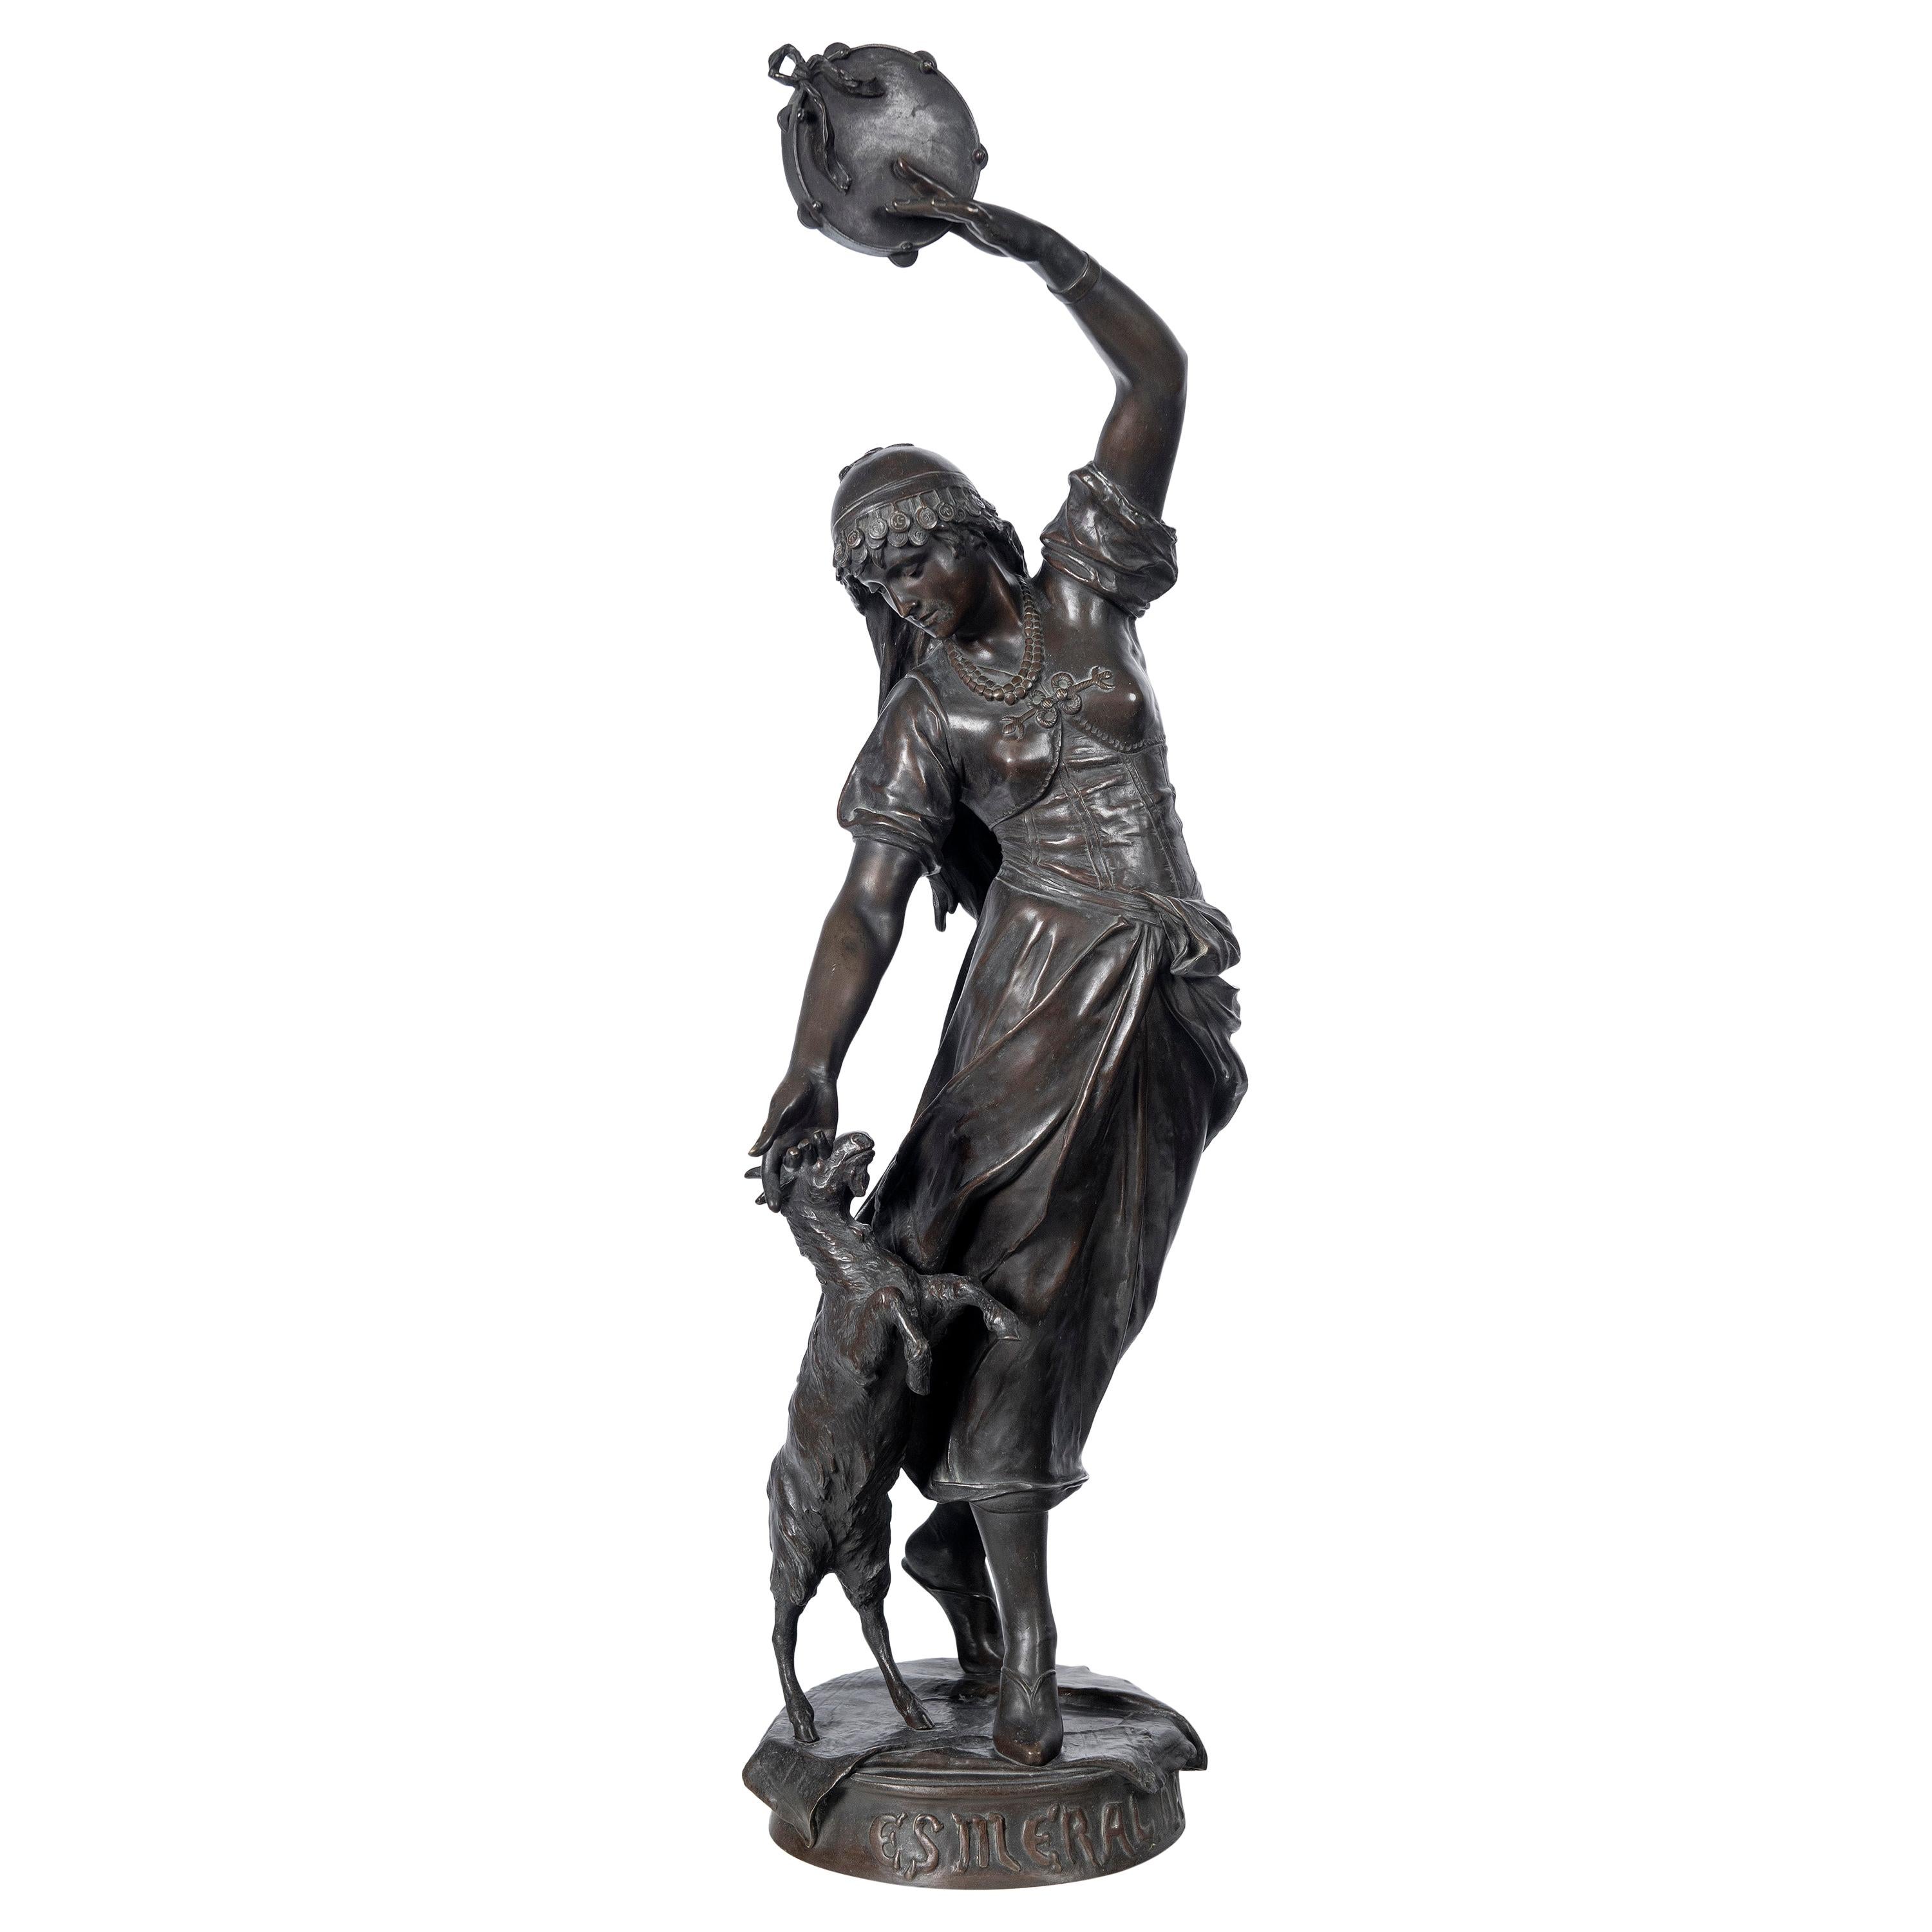 Bronze Sculpture by Eugene Marioton, Titled, "Esmeralda", France, 19th century